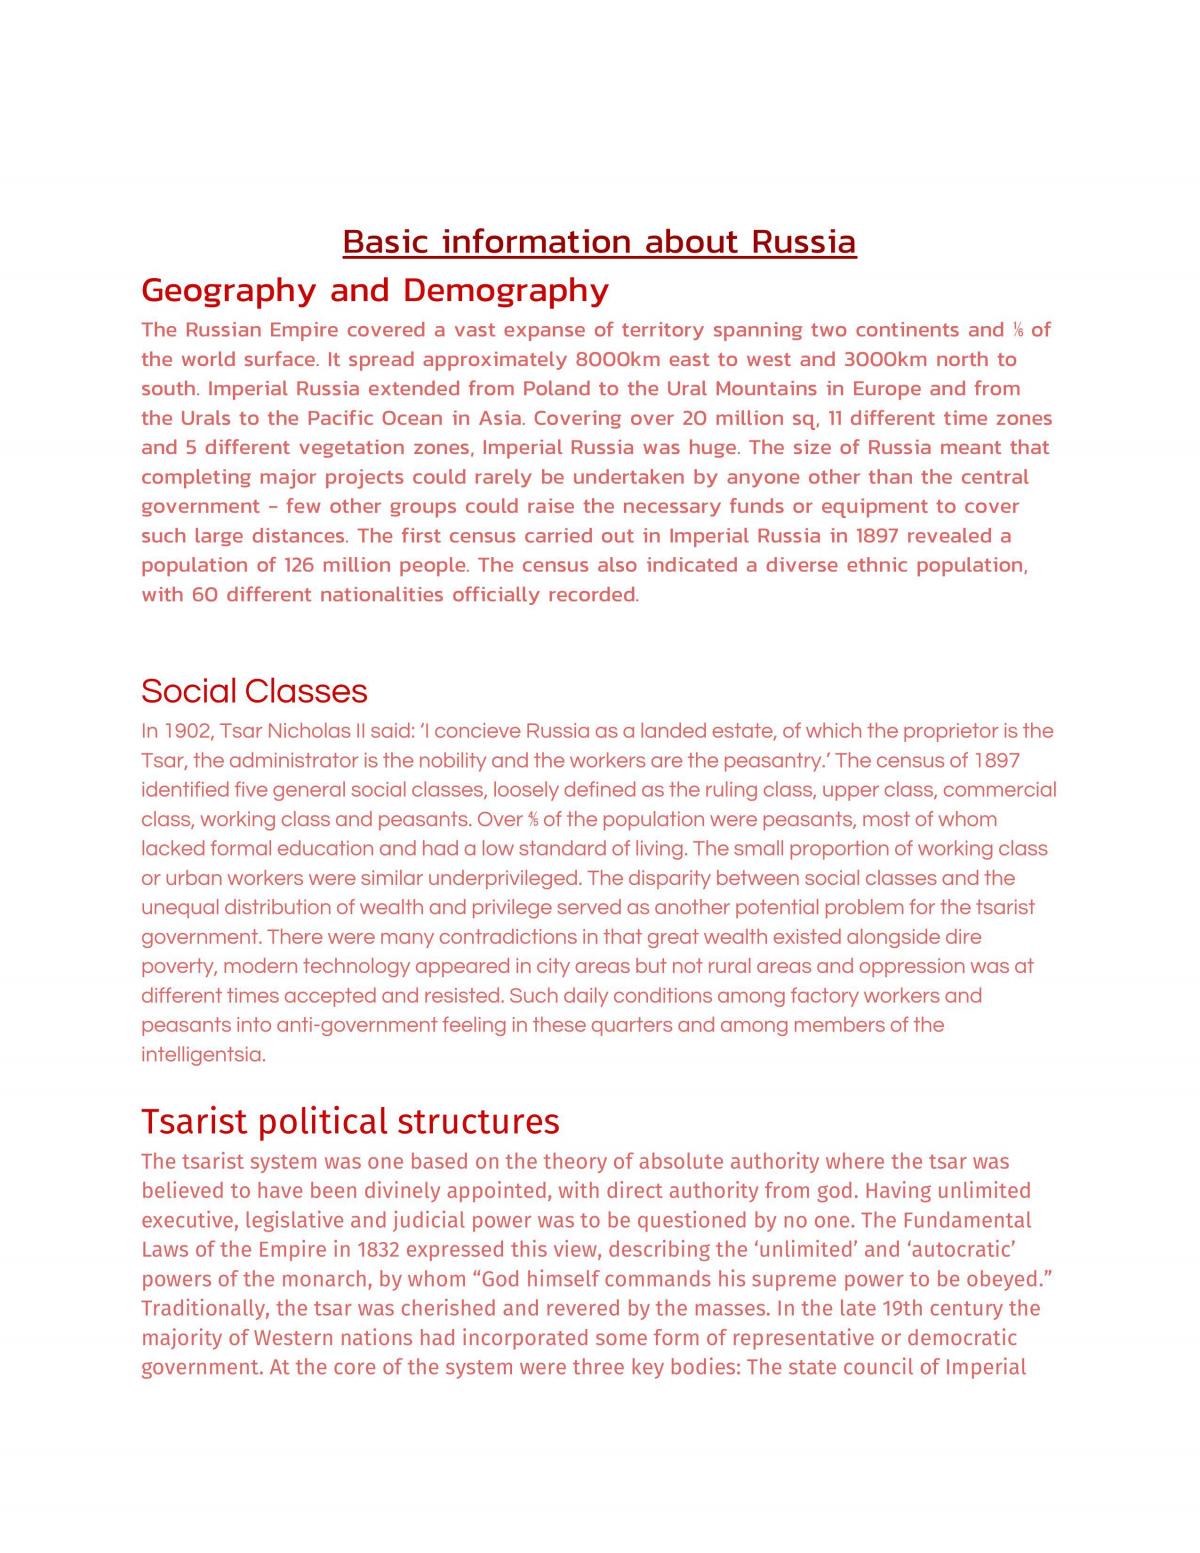 russian revolution research paper topics